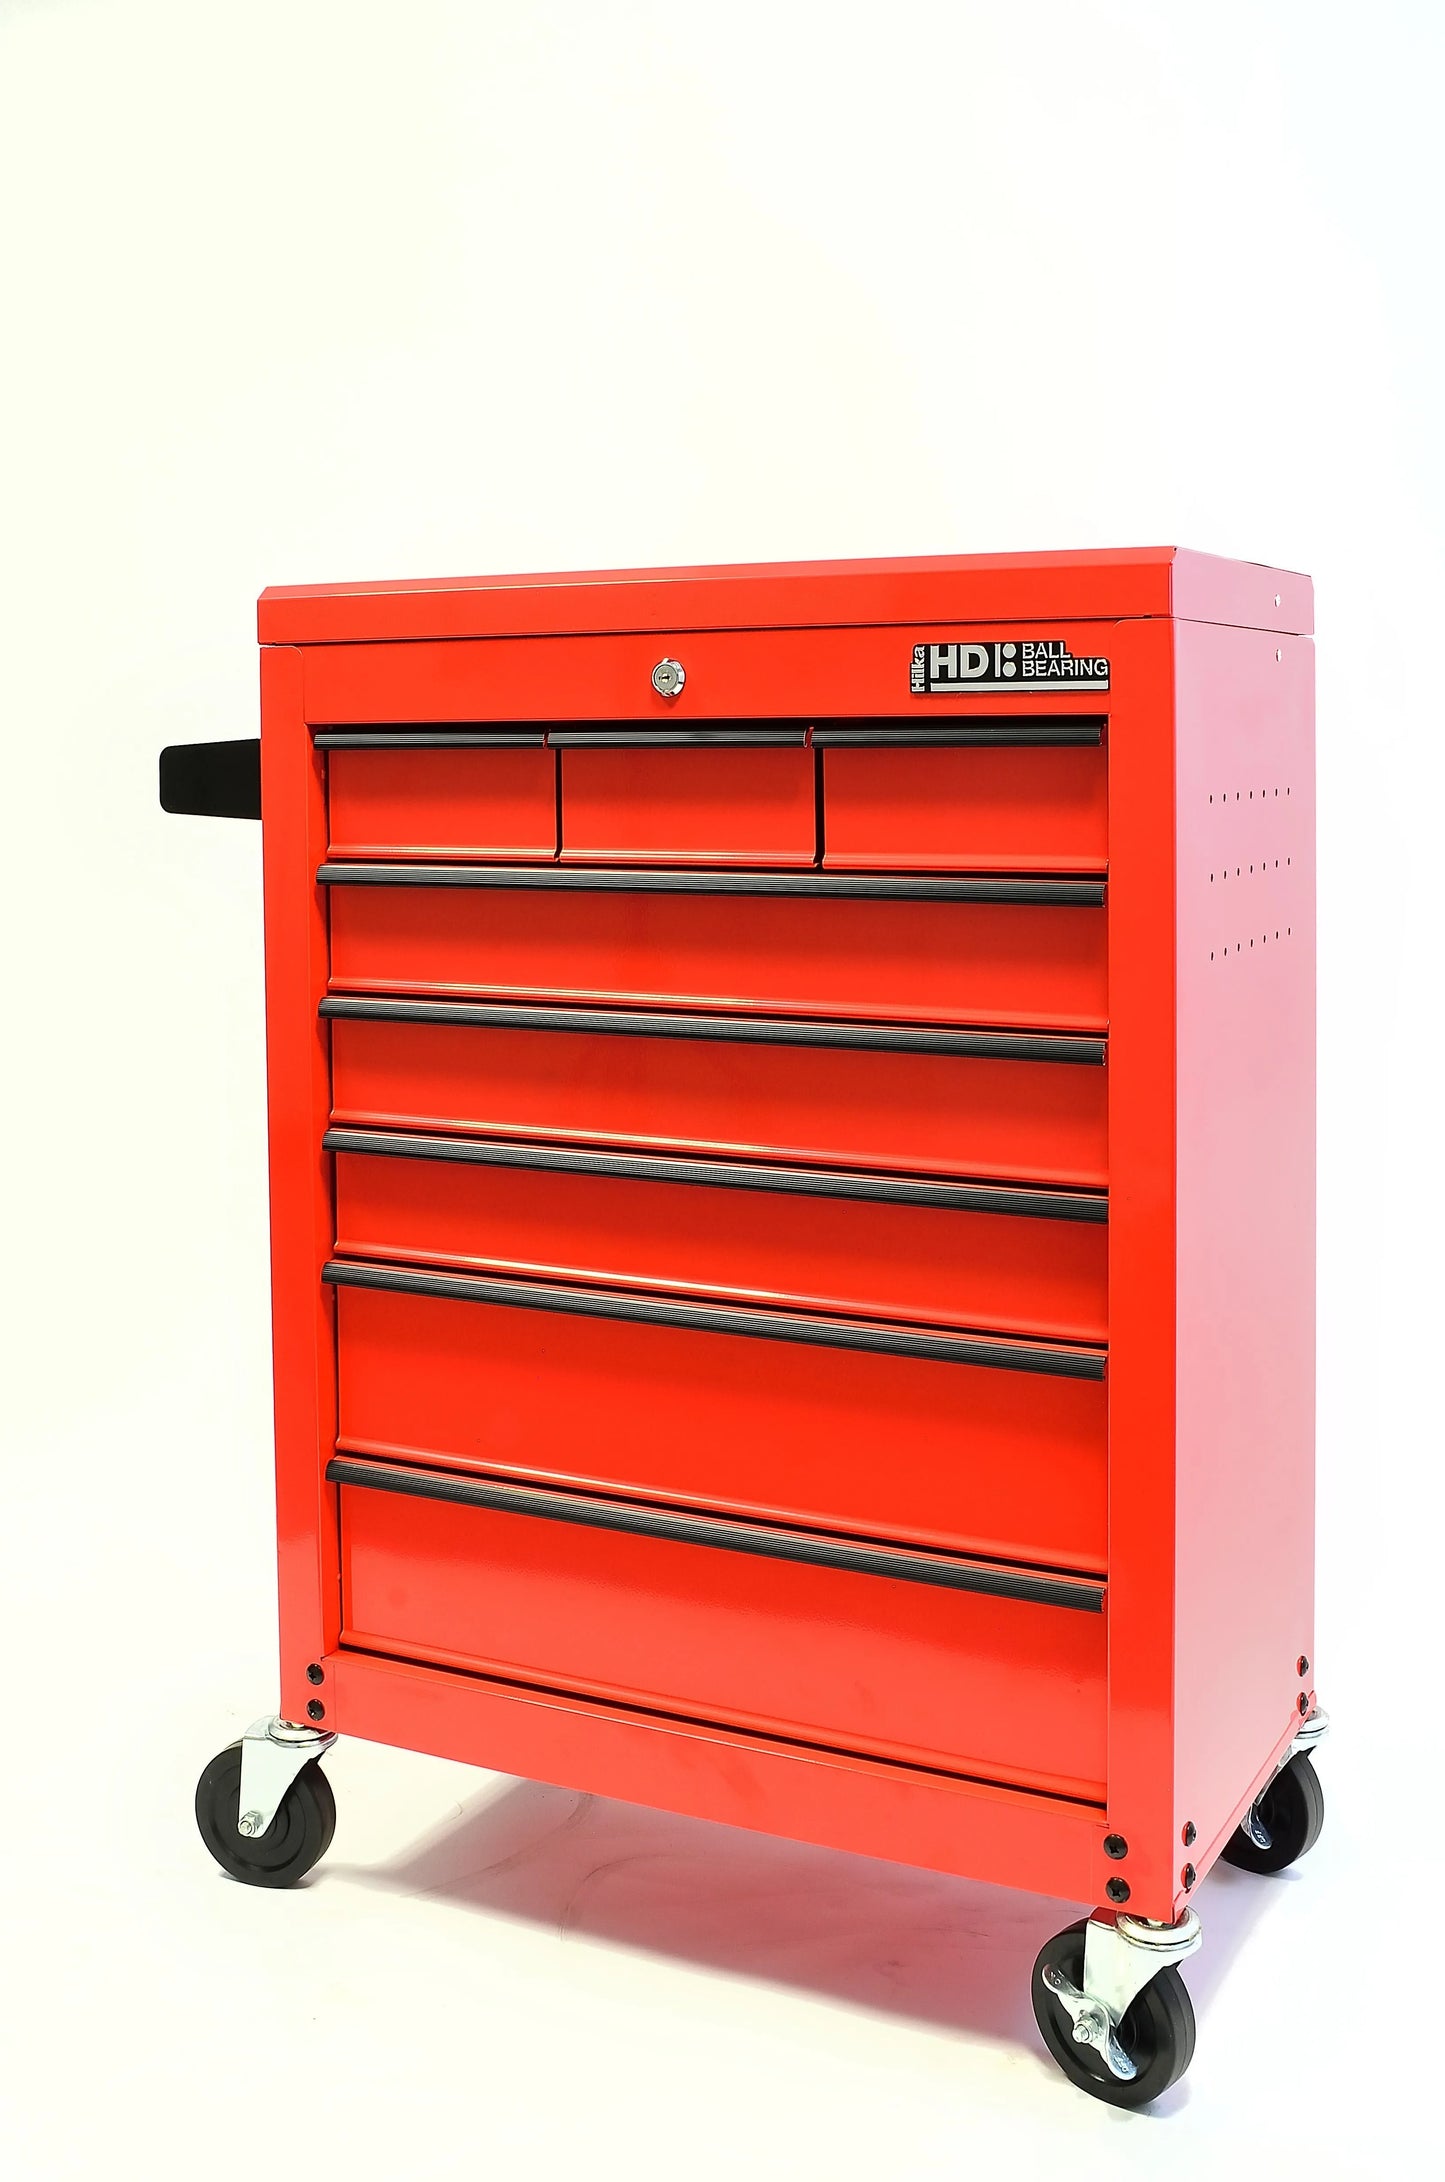 HILKA l HD 8 Drawer Trolley with Lid Storage BBS Tool Chest Roll Cab